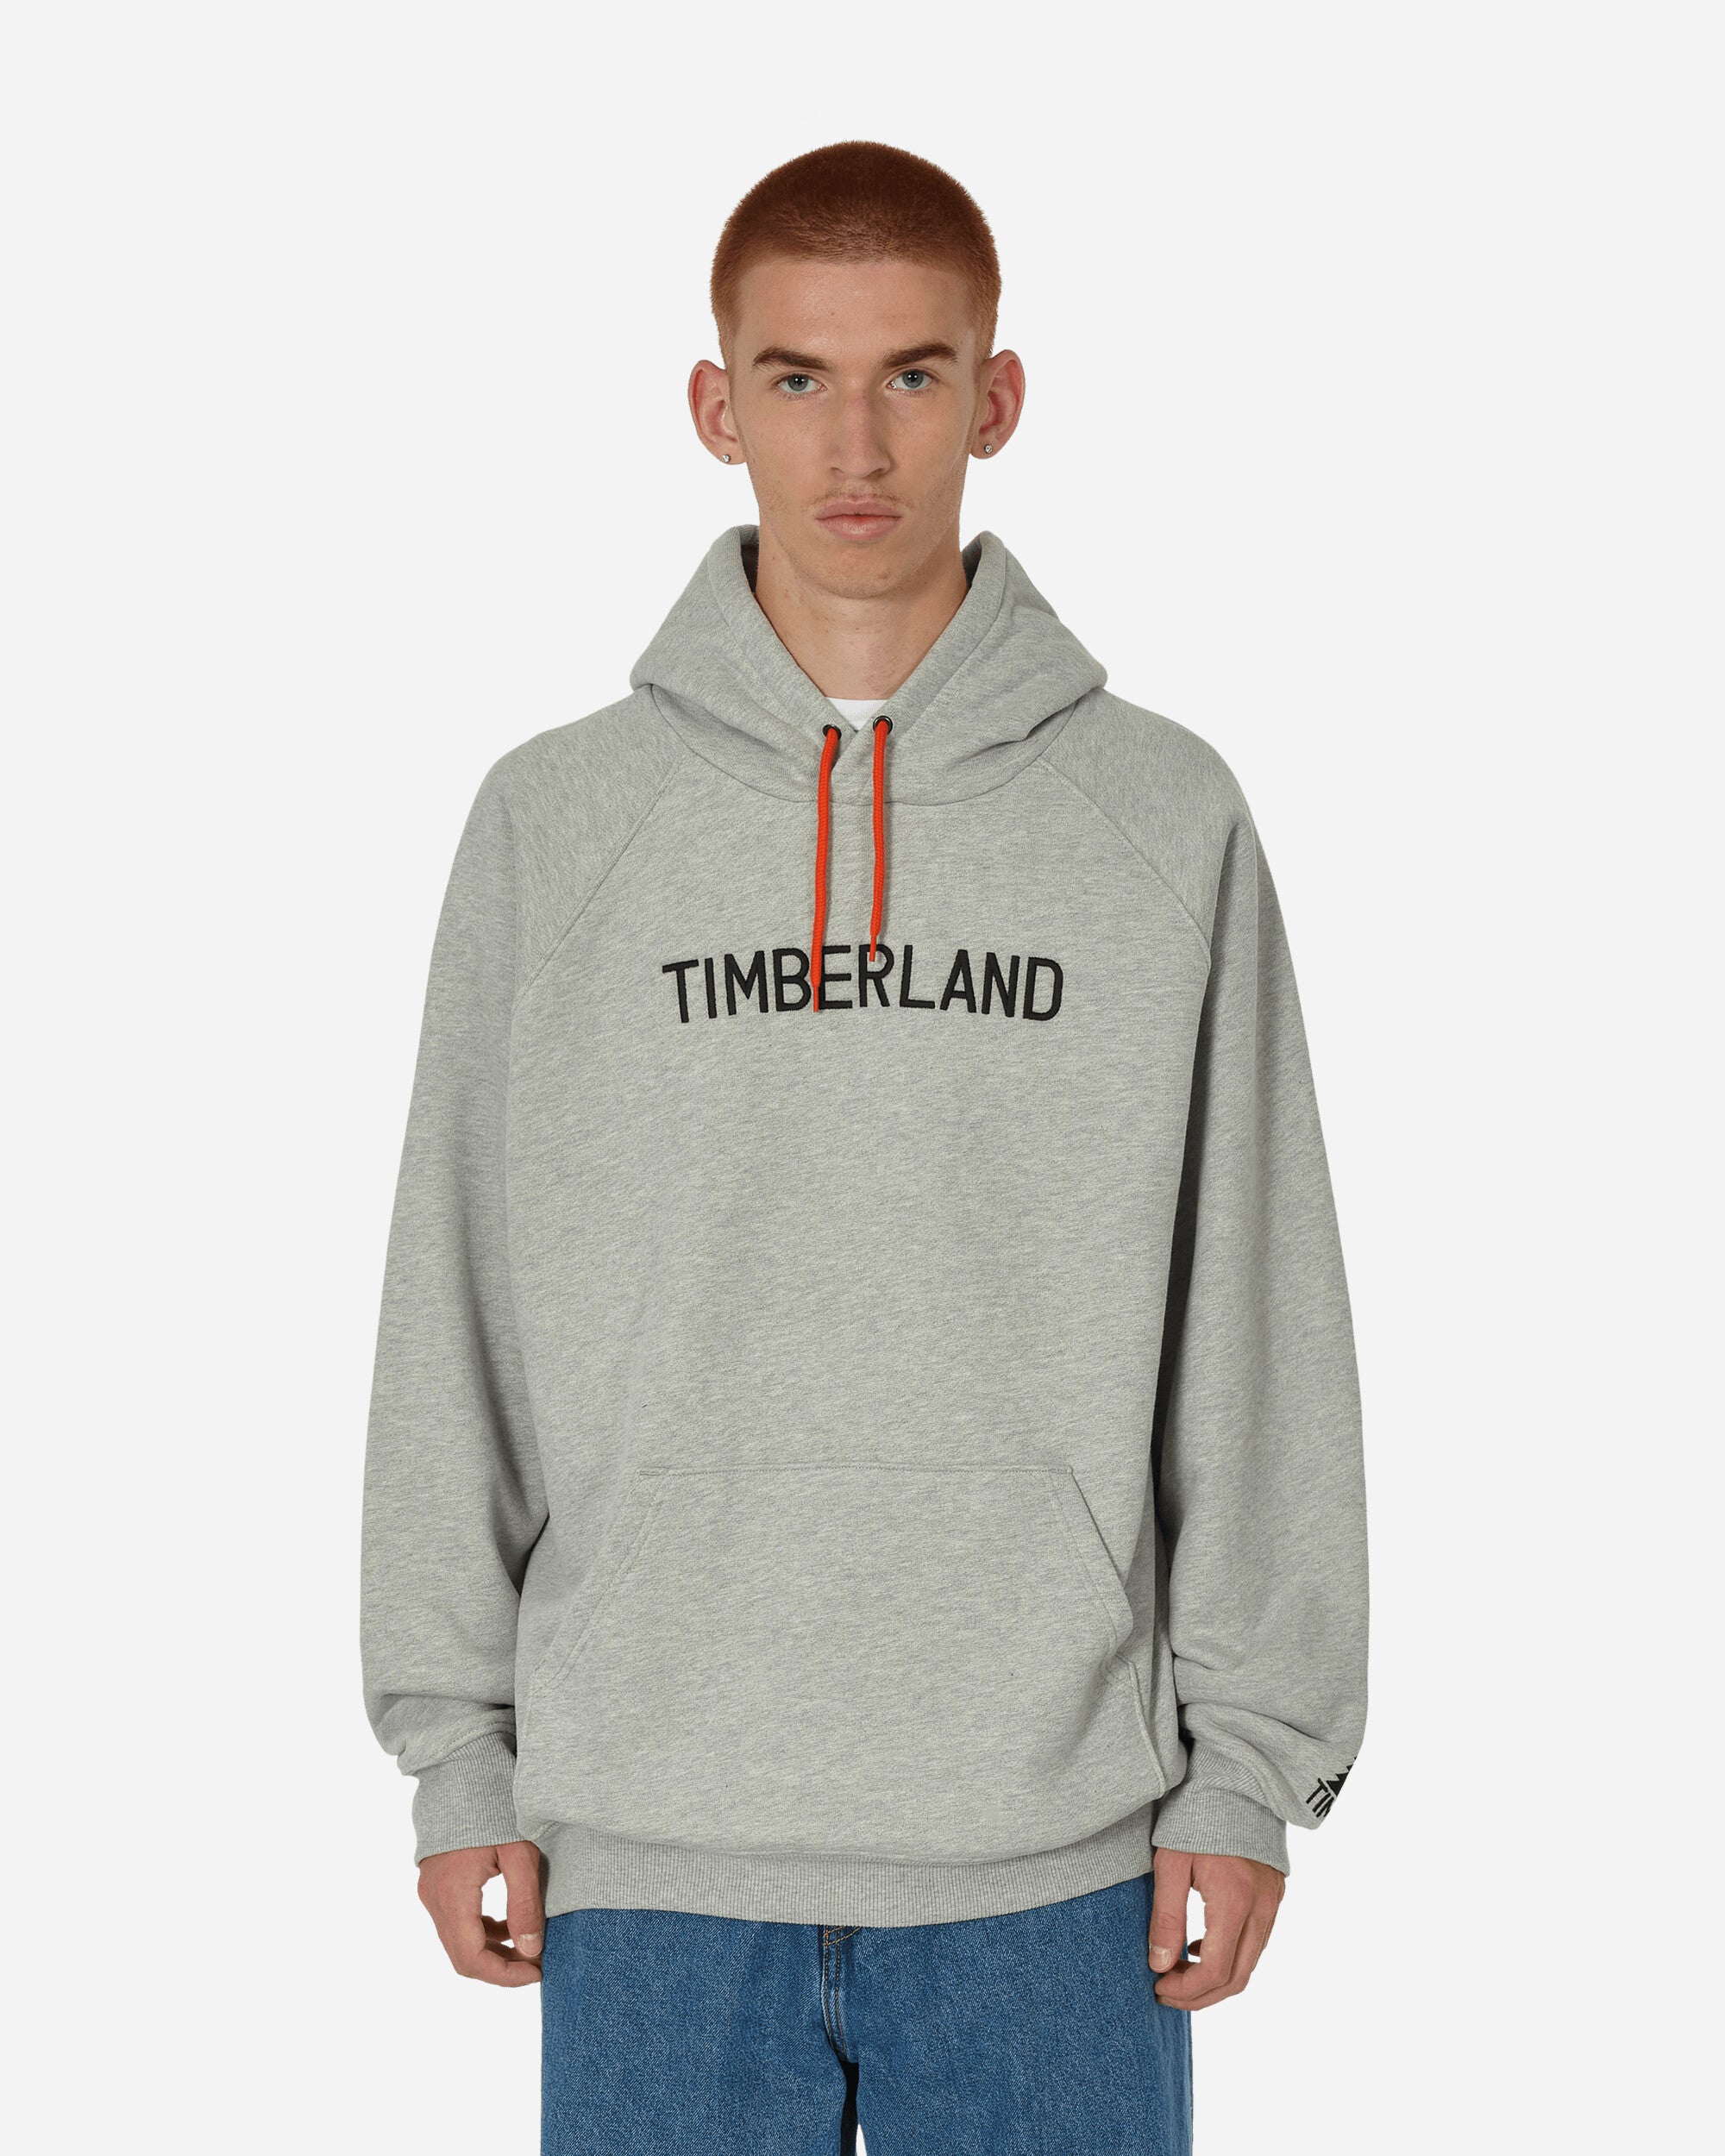 Timberland Nina Chanel Abney Hooded Sweatshirt Medium Grey